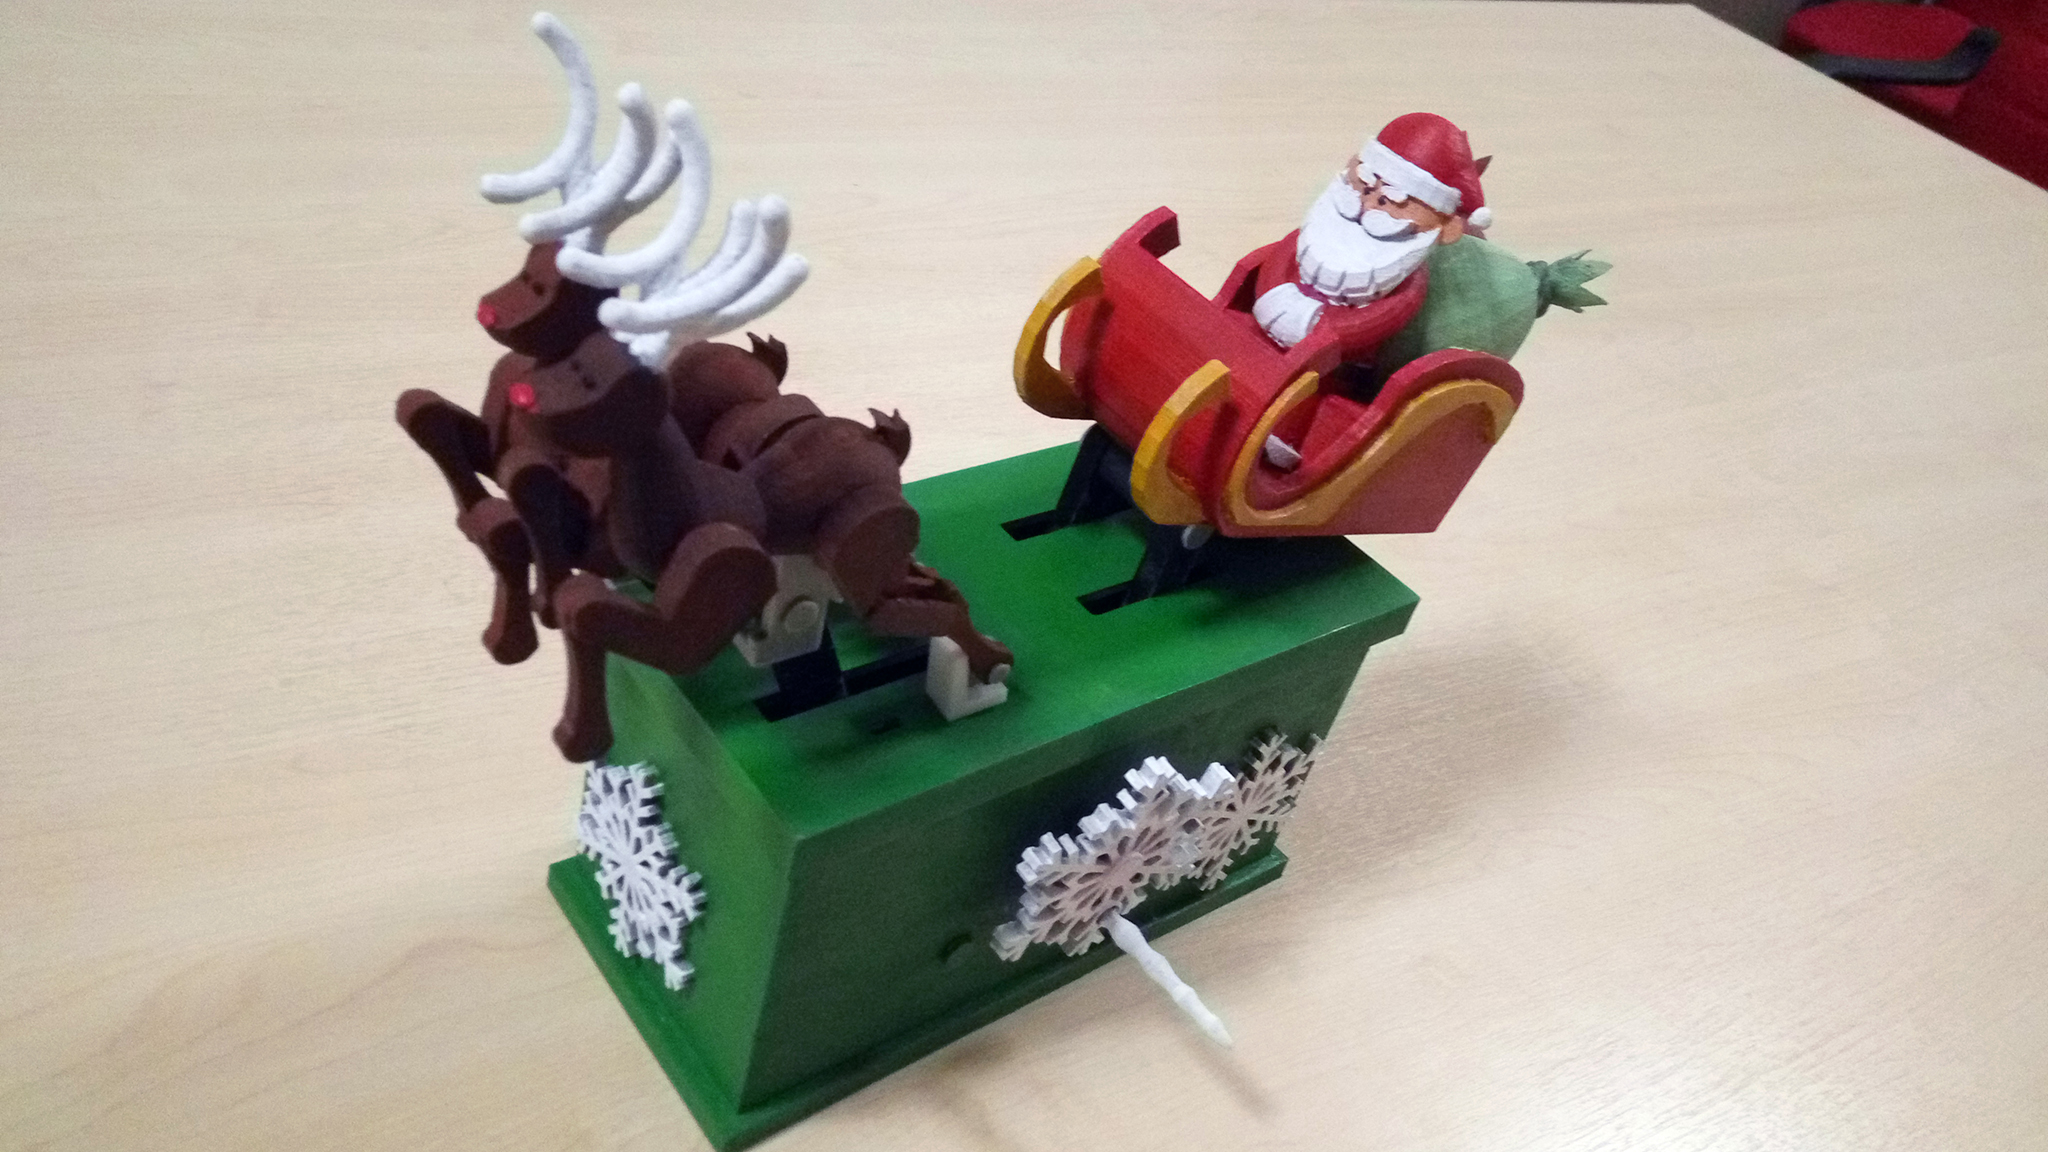 Santa Claus Reindeer Automata